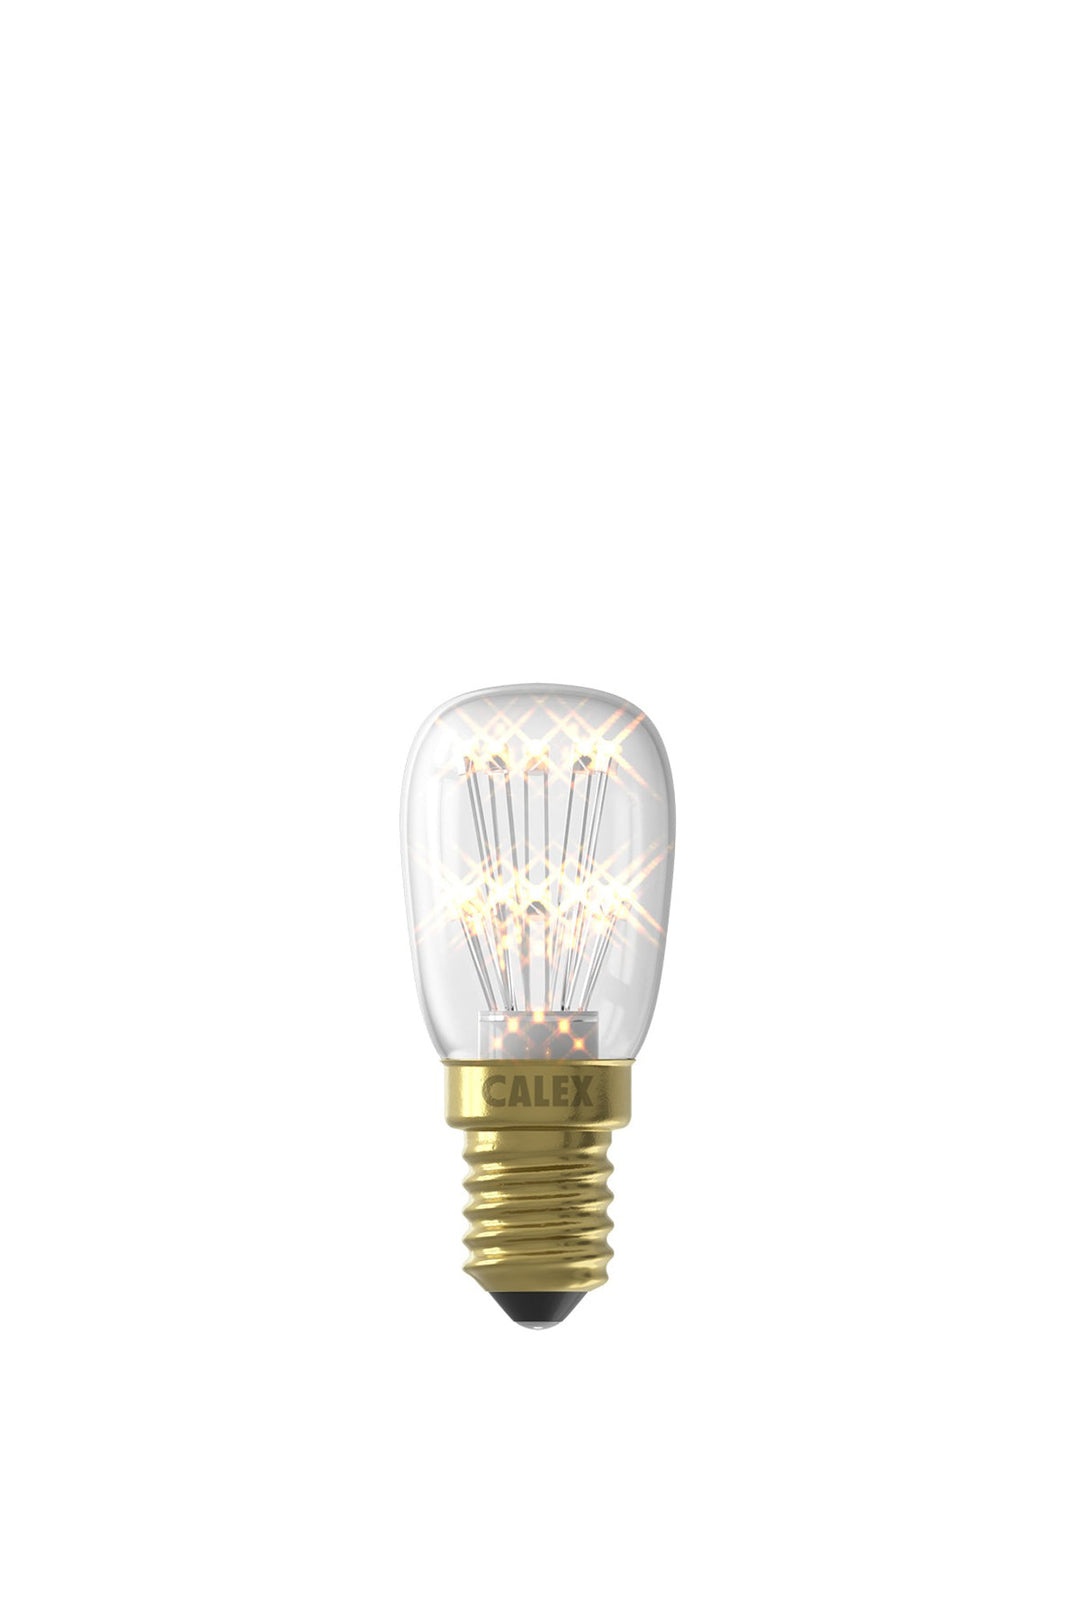 Calex LED Pearl Pilot Lamp T26, 13-LEDs, E14, Non-Dimmable 1301004700